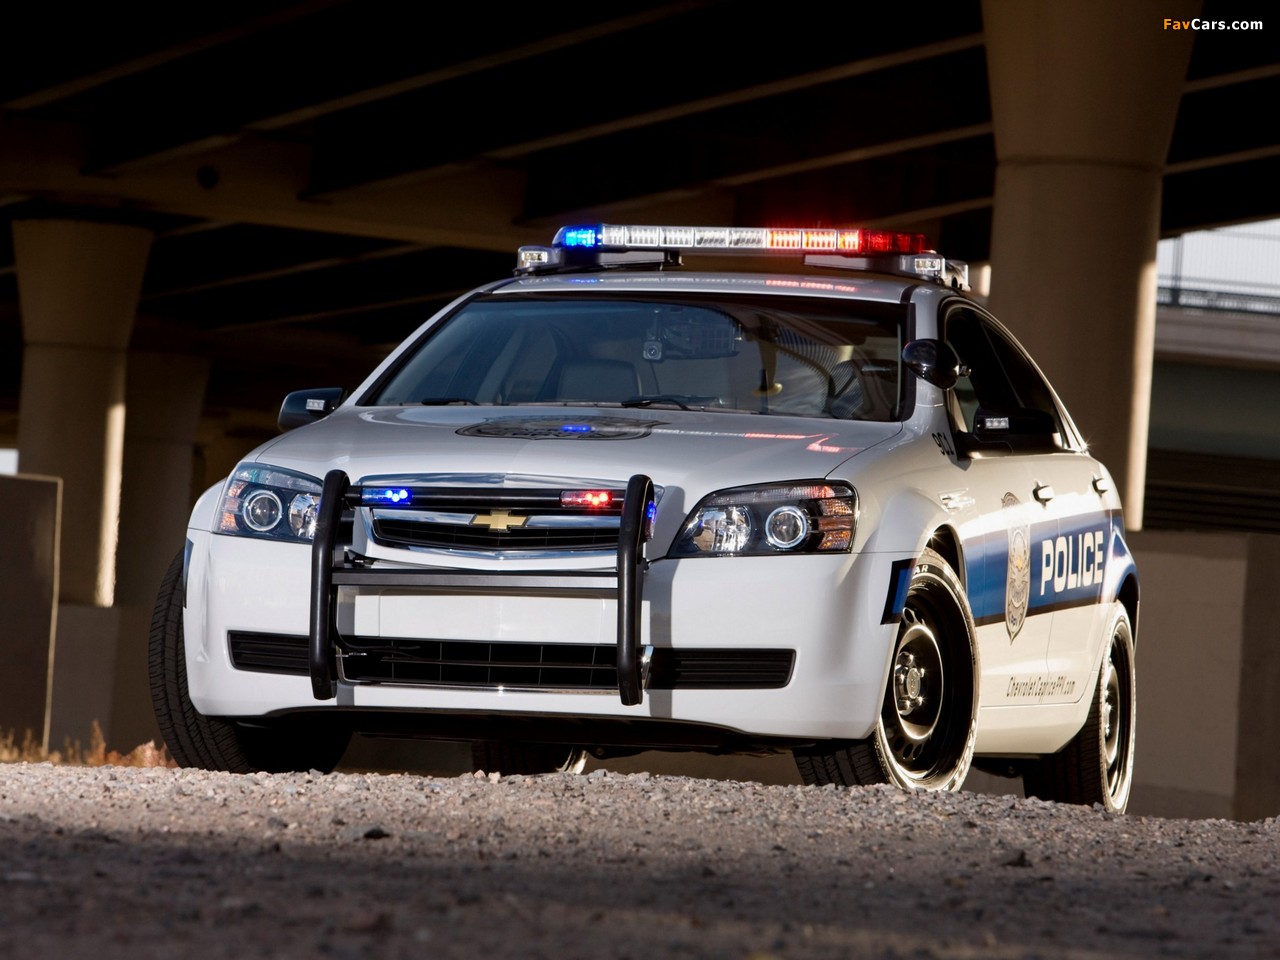 Chevrolet Caprice Police Patrol Vehicle 2010 pictures (1280 x 960)